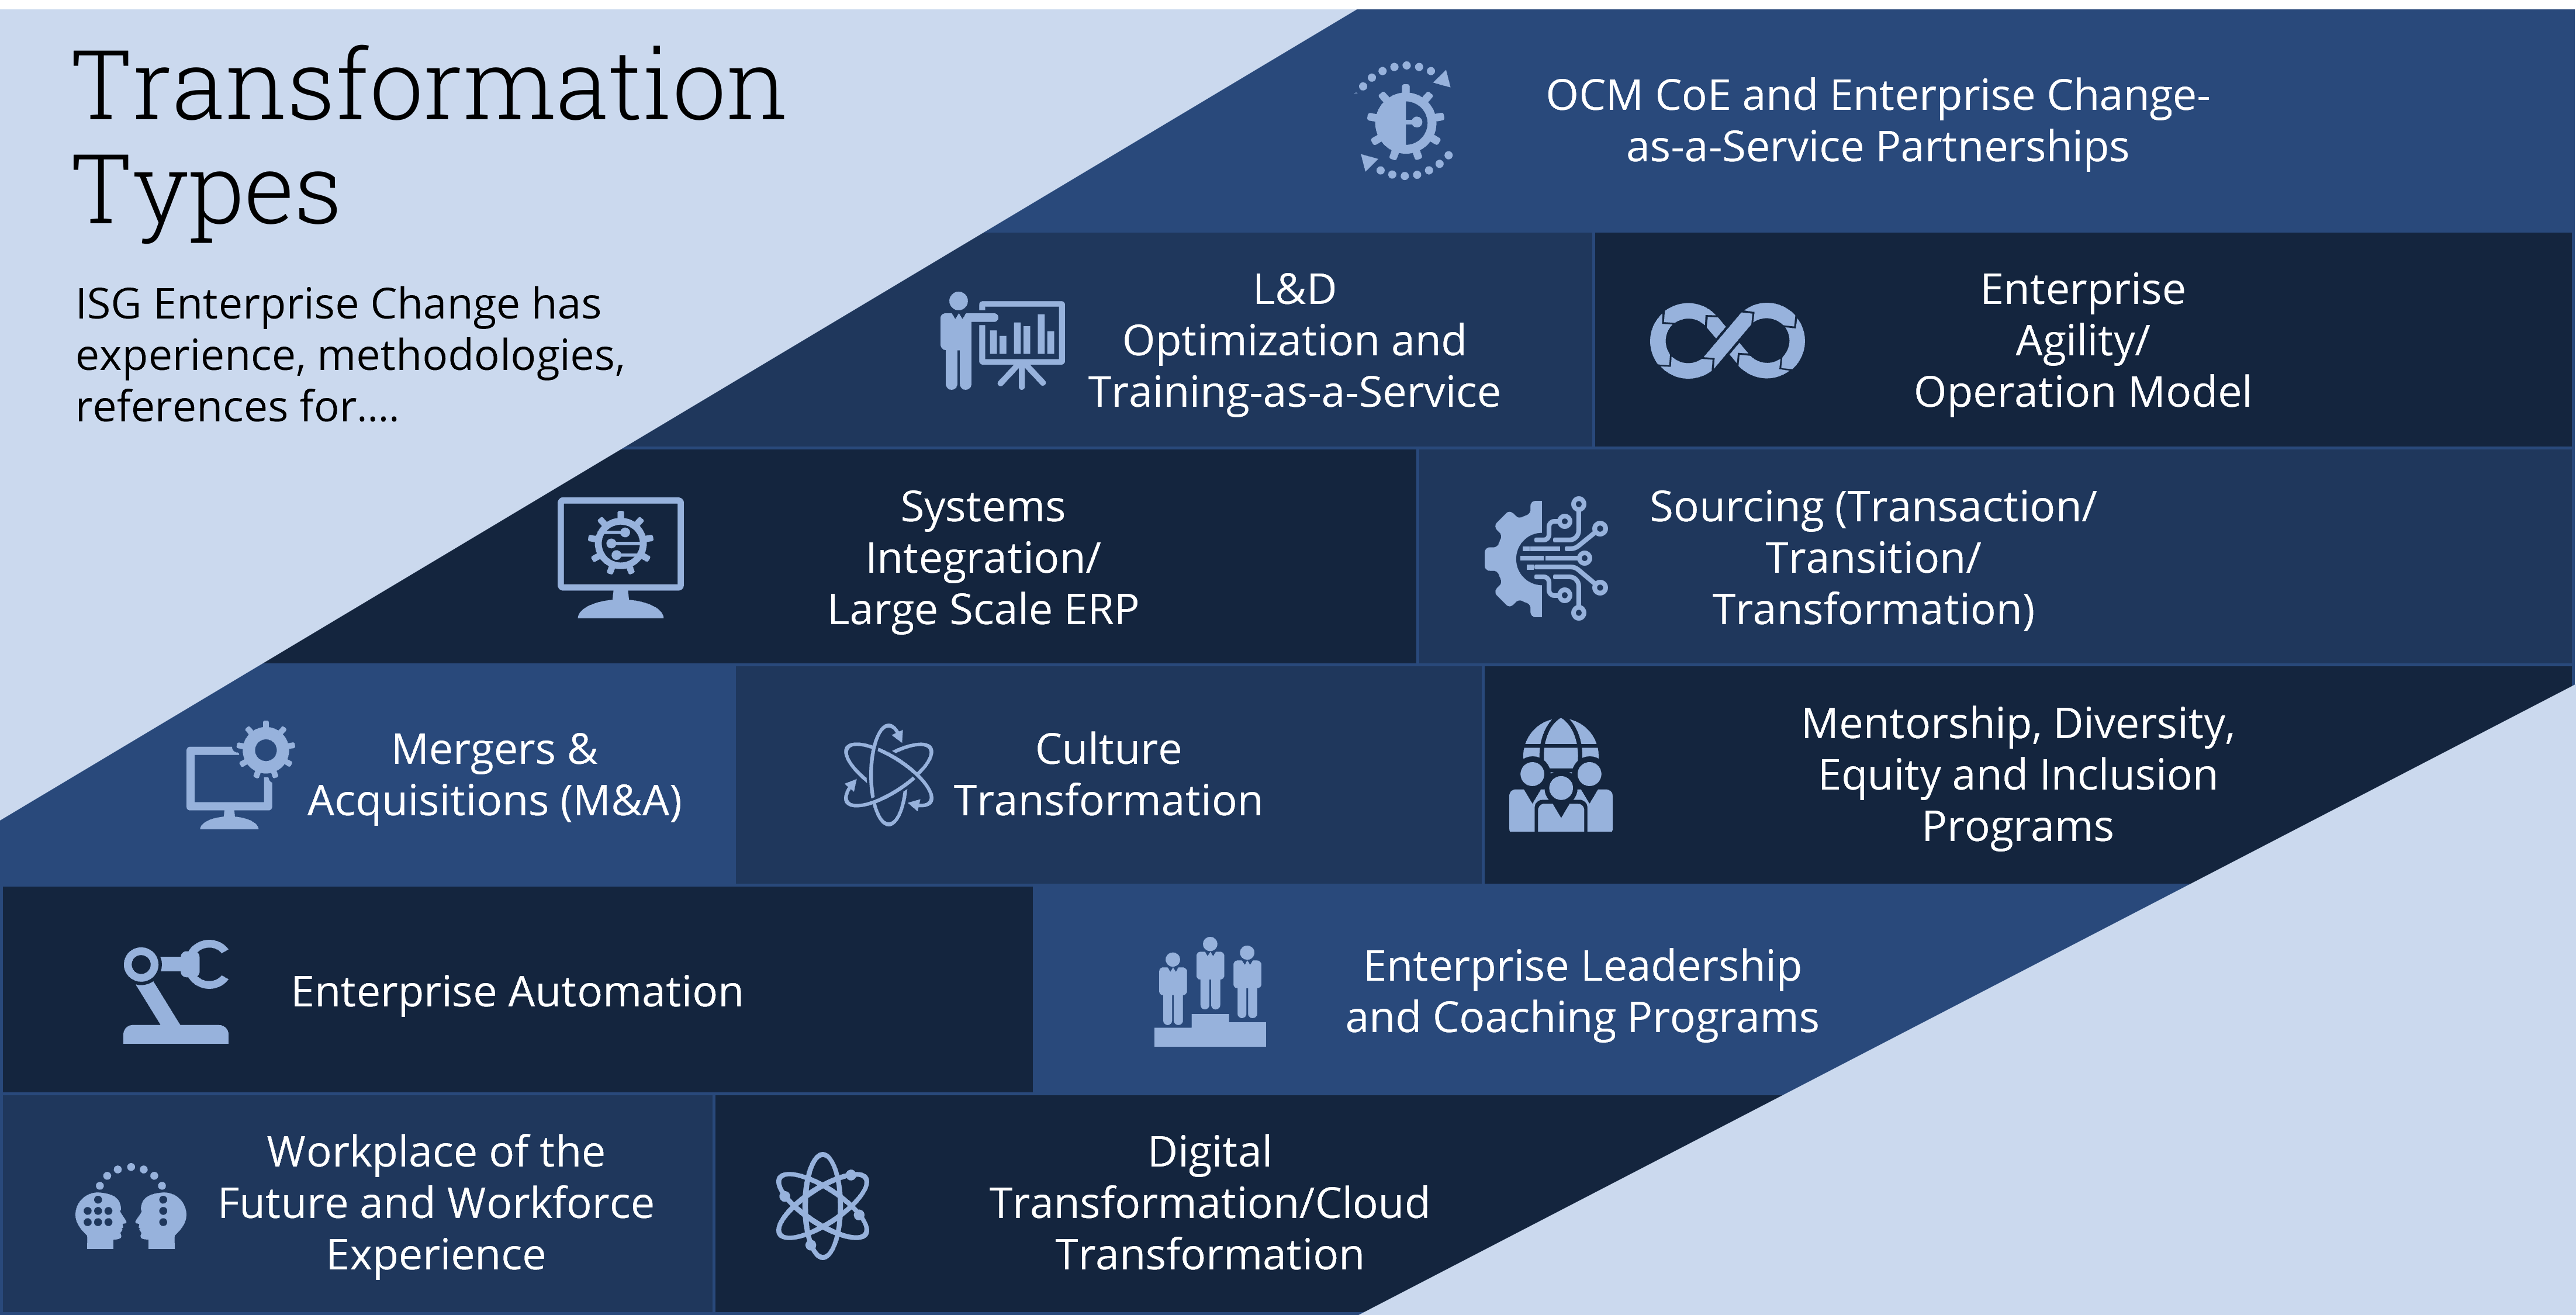 transformation types - isg enterprise change ocm